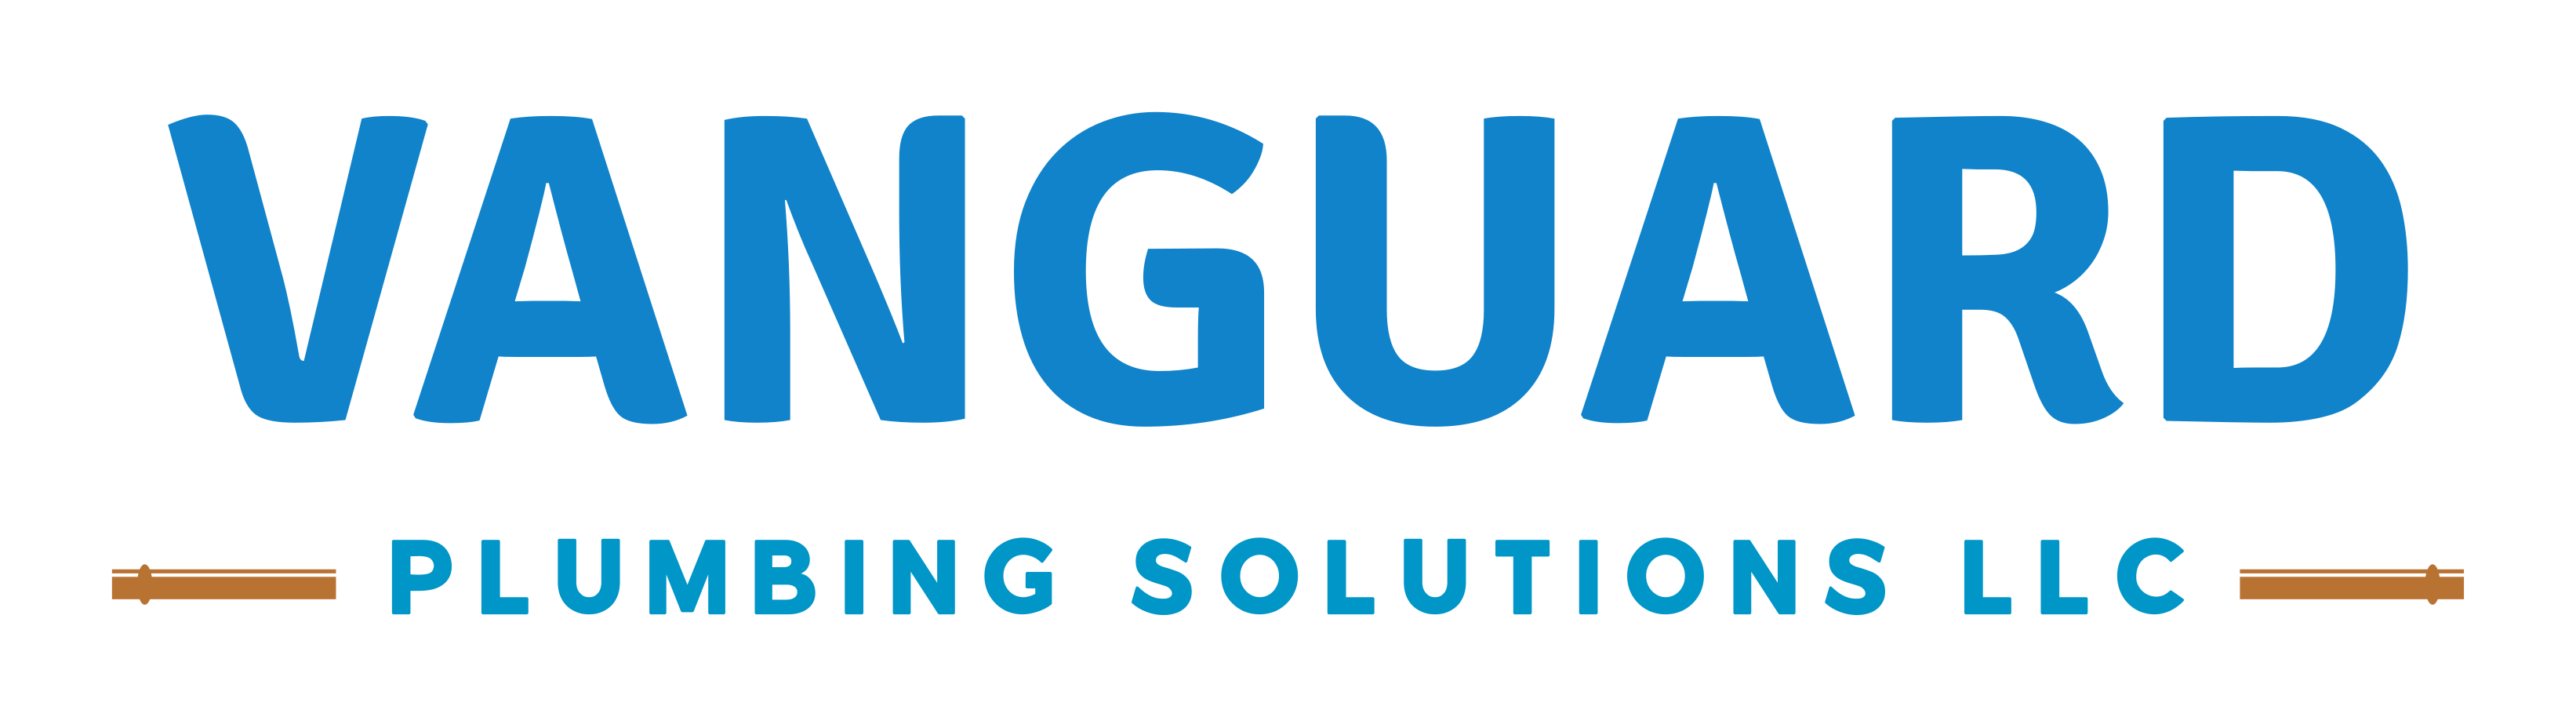 Vanguard Plumbing Solutions LLC Logo